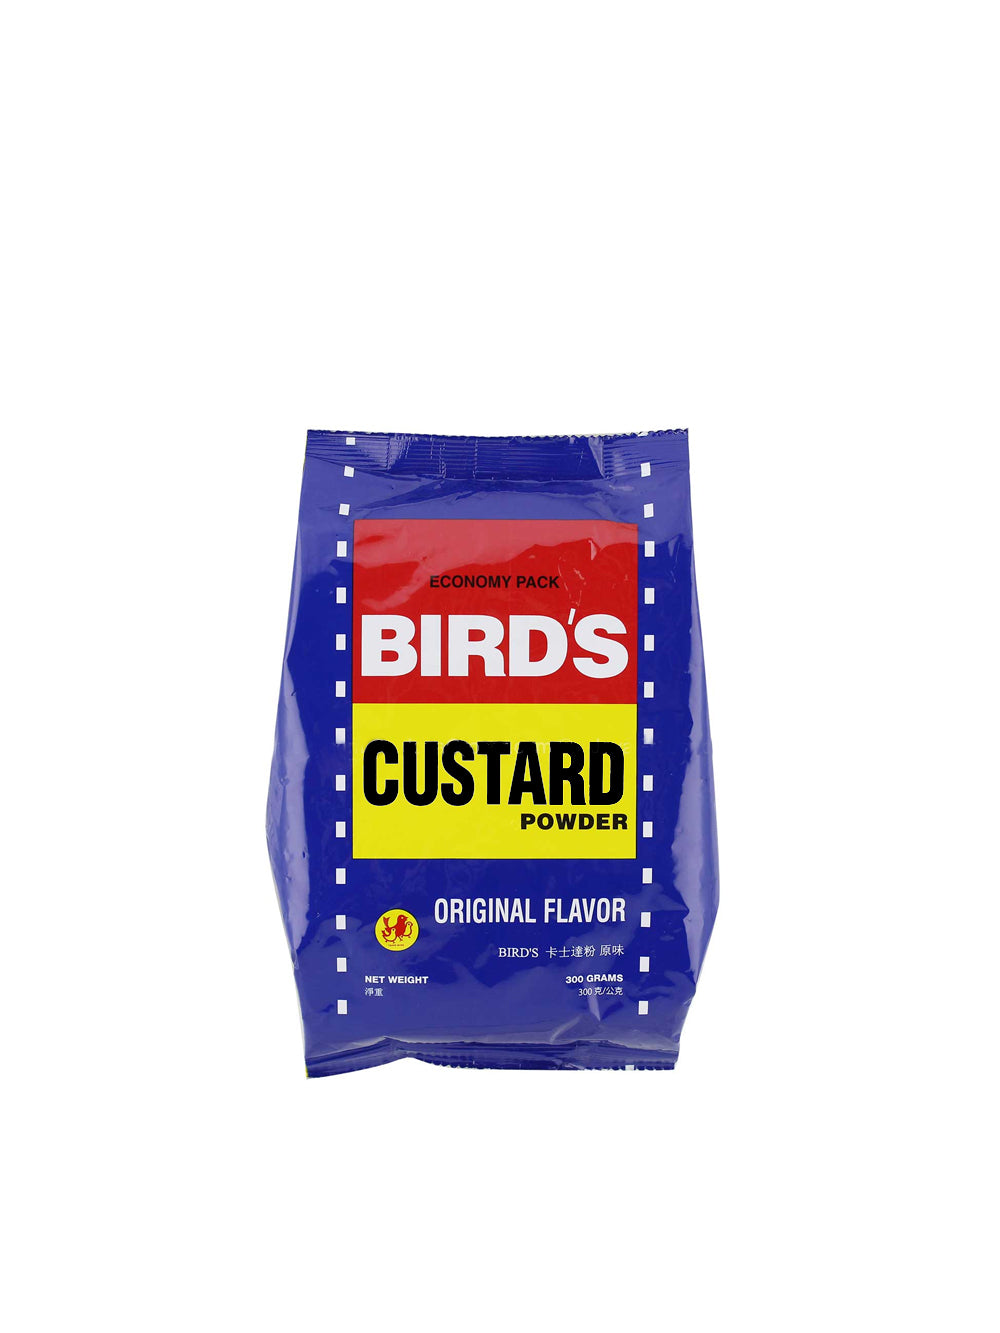 Bird's Custard Powder 雞仔蛋黃粉